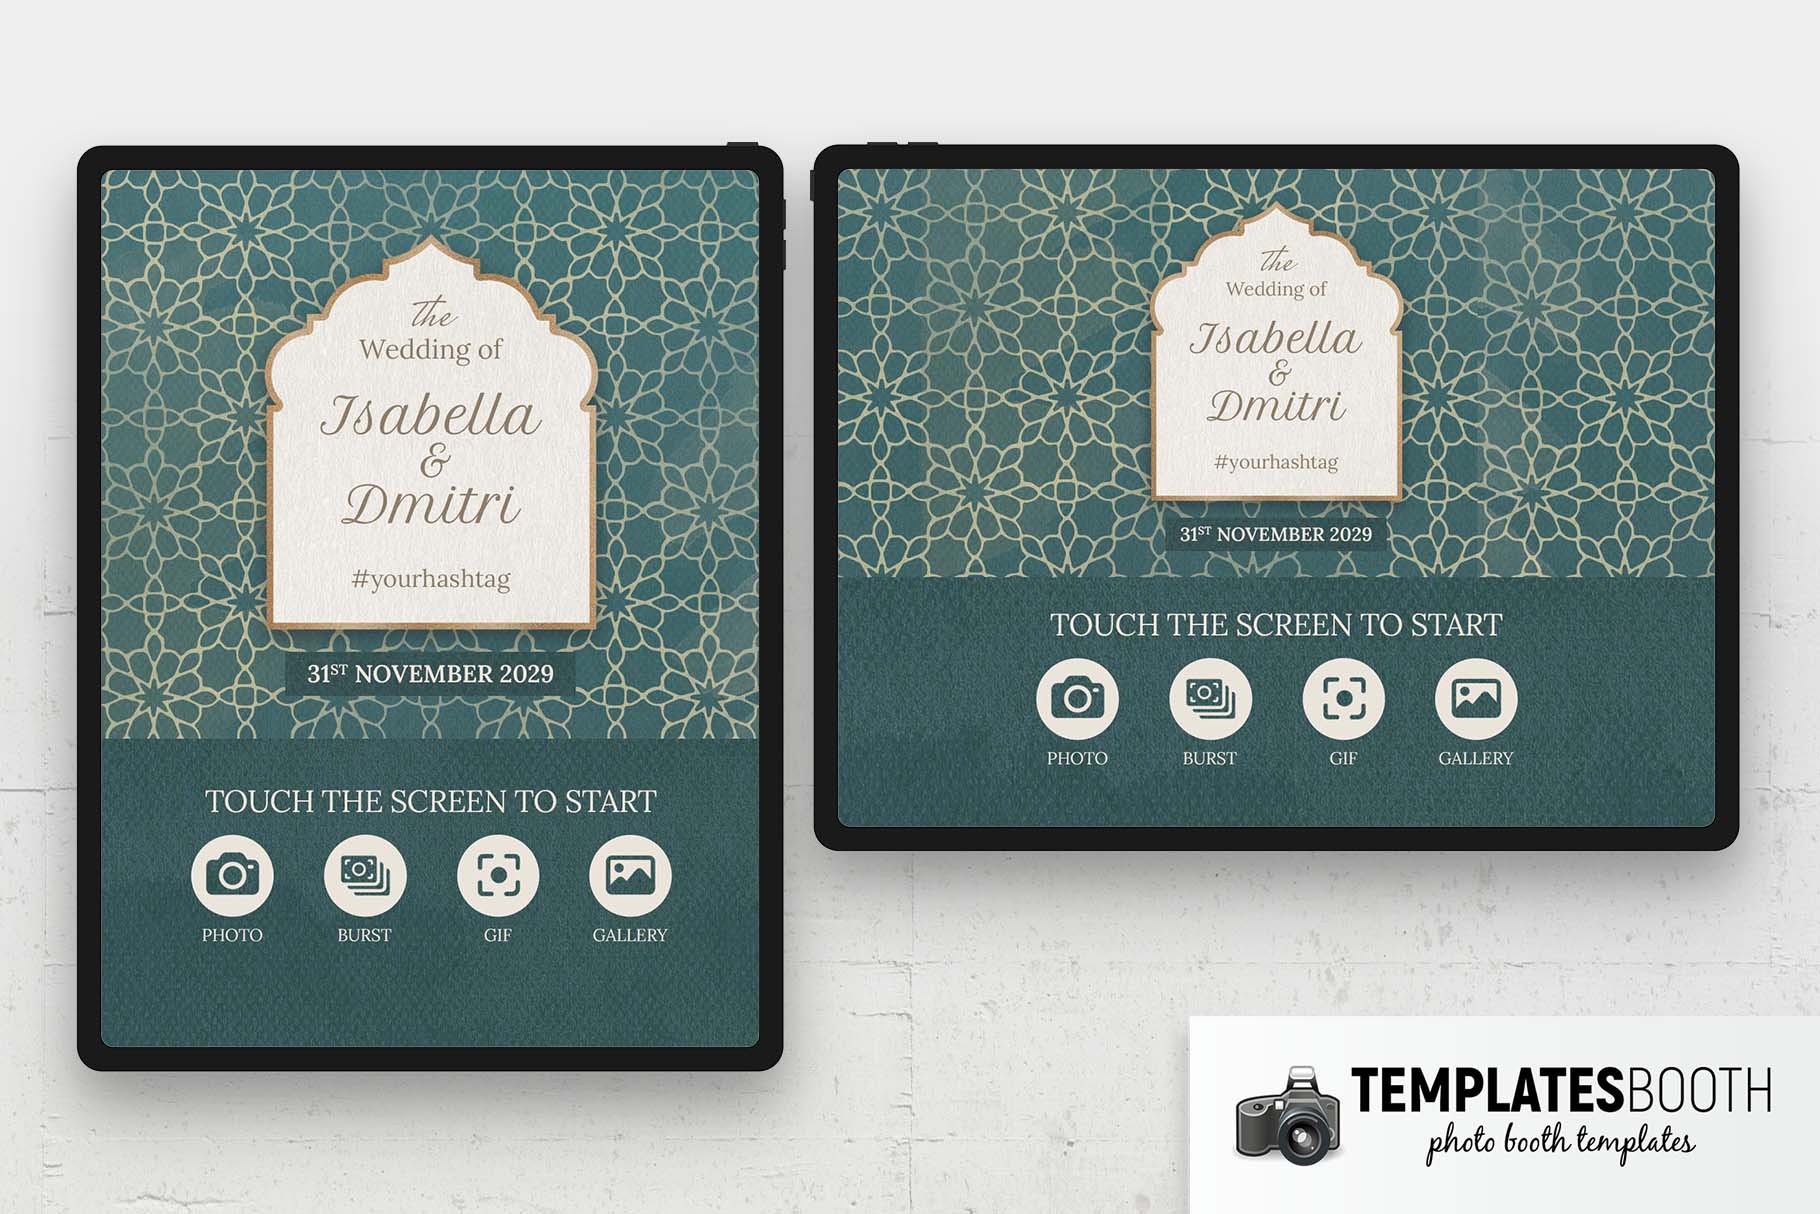 Islamic Wedding Photo Booth Welcome Screen